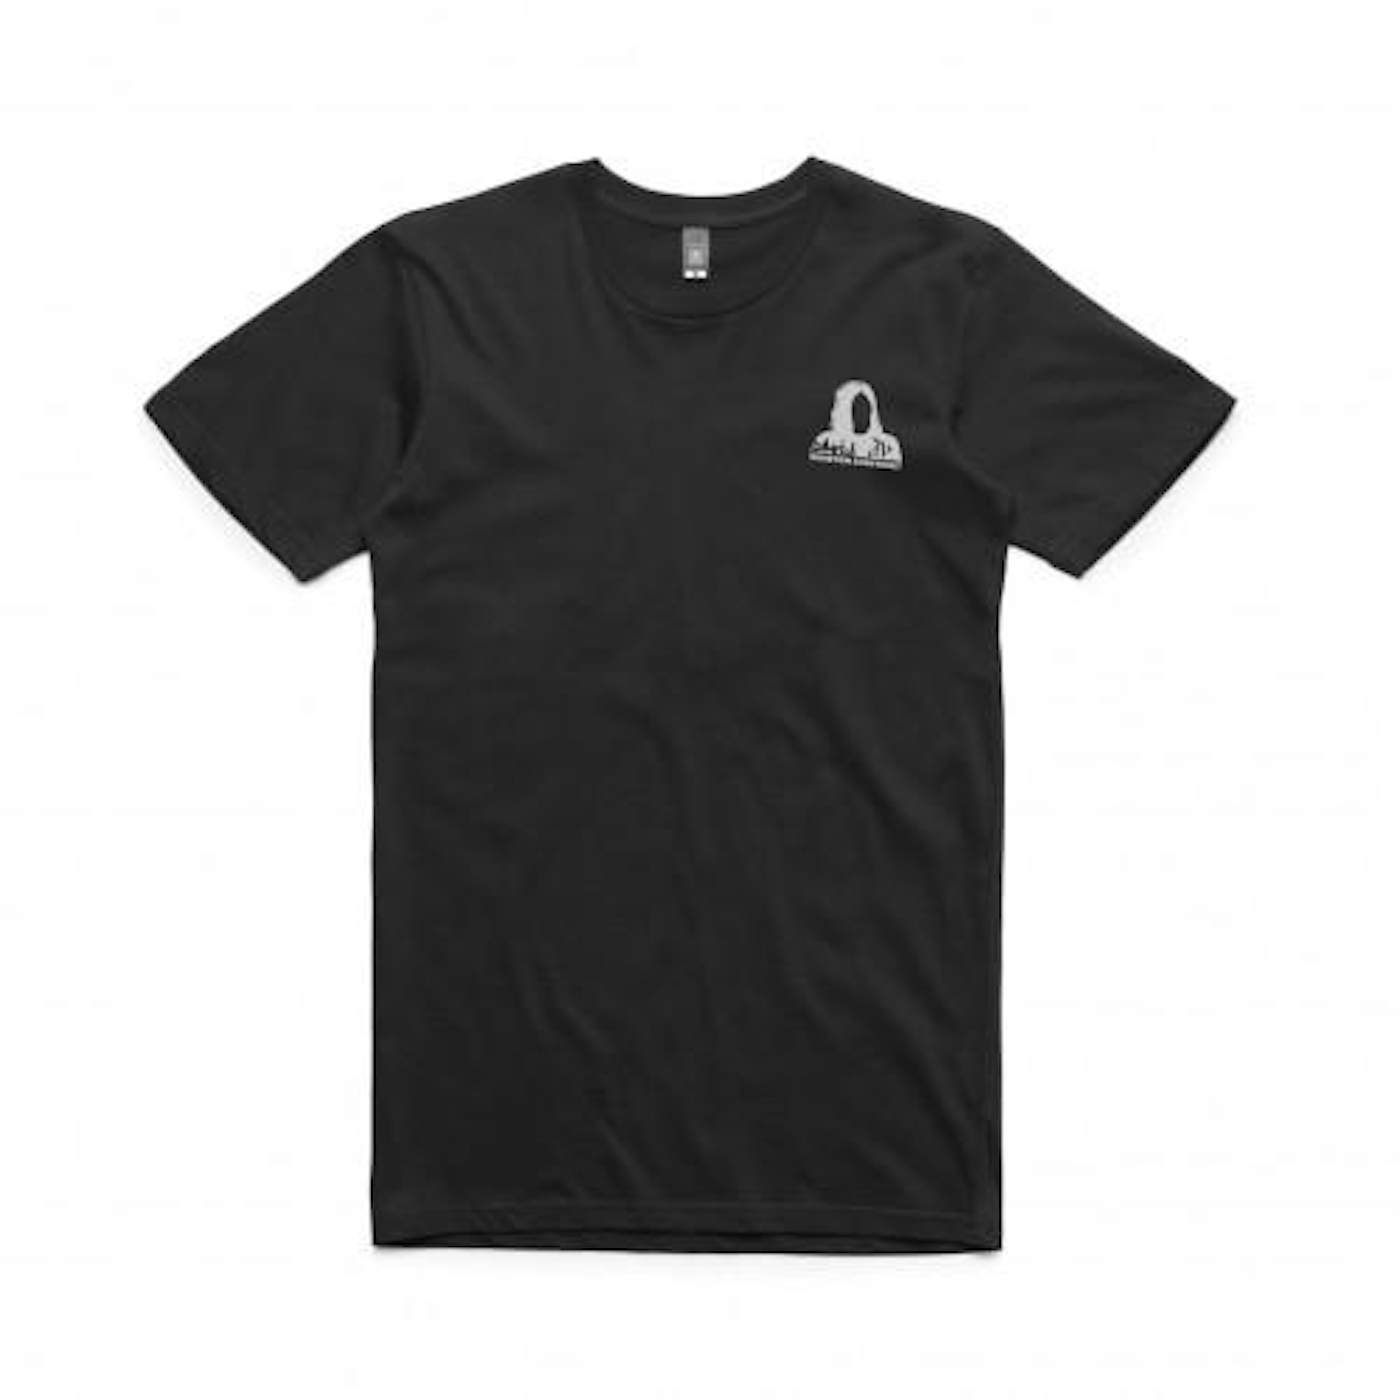 Winston Surfshirt | Black T-Shirt